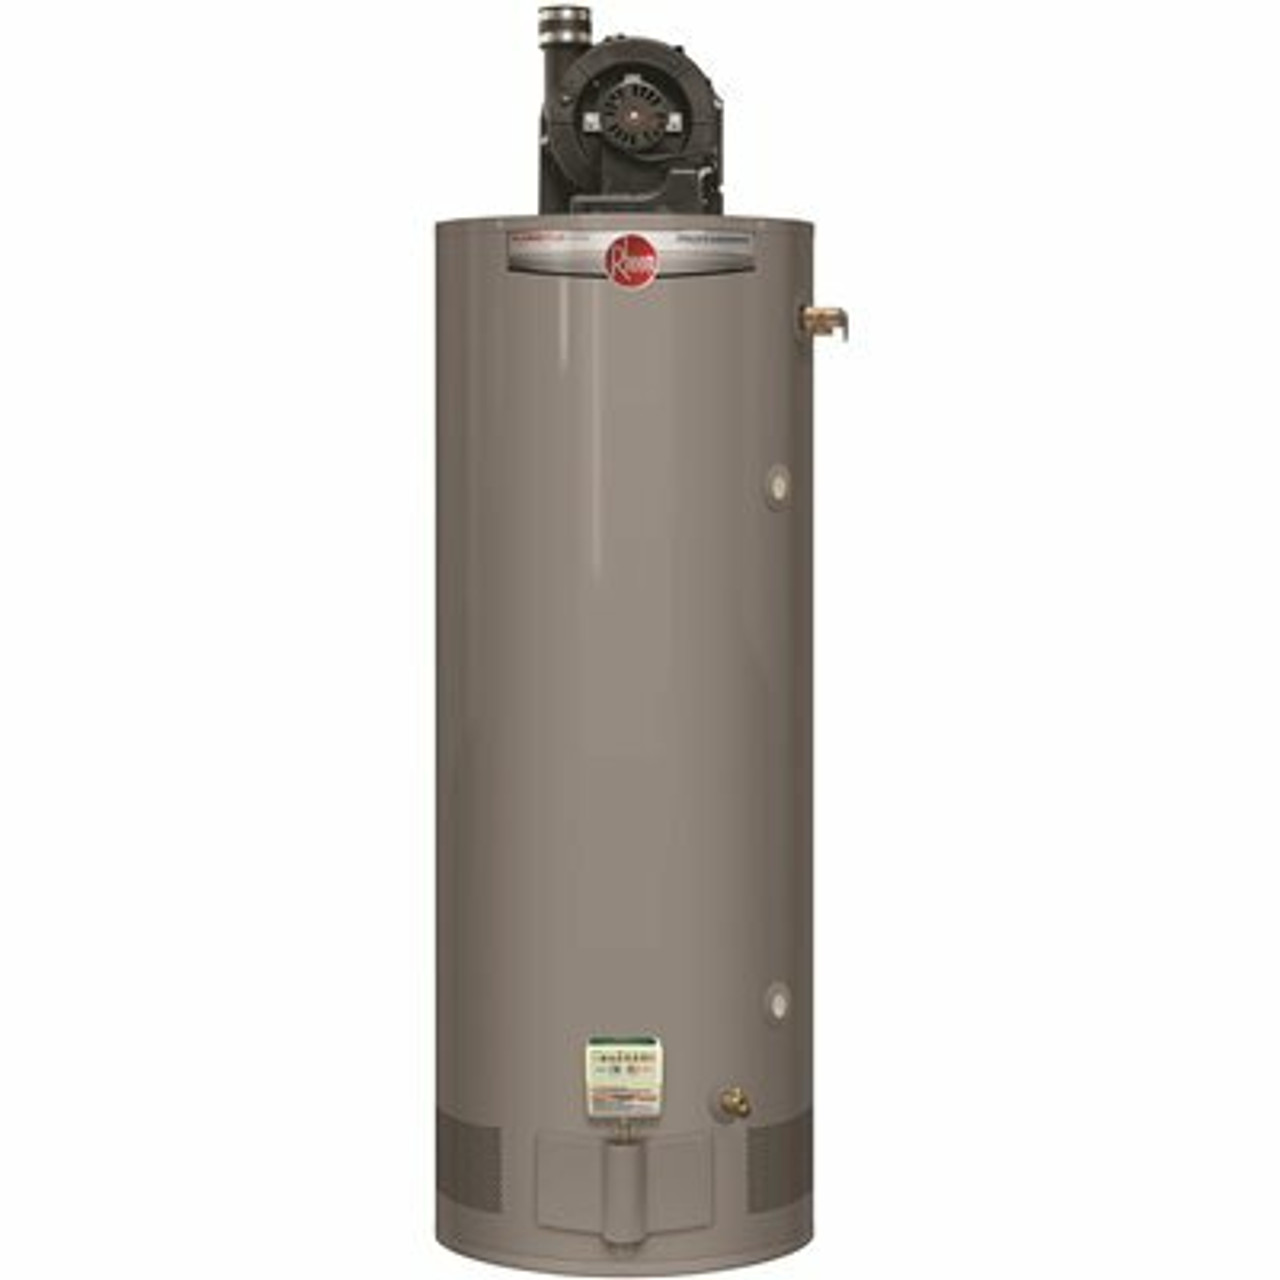 Rheem Heavy-Duty 75 Gal. Power-Vent Residential Natural Gas Water Heater 75100 Btu Side Relief Valve